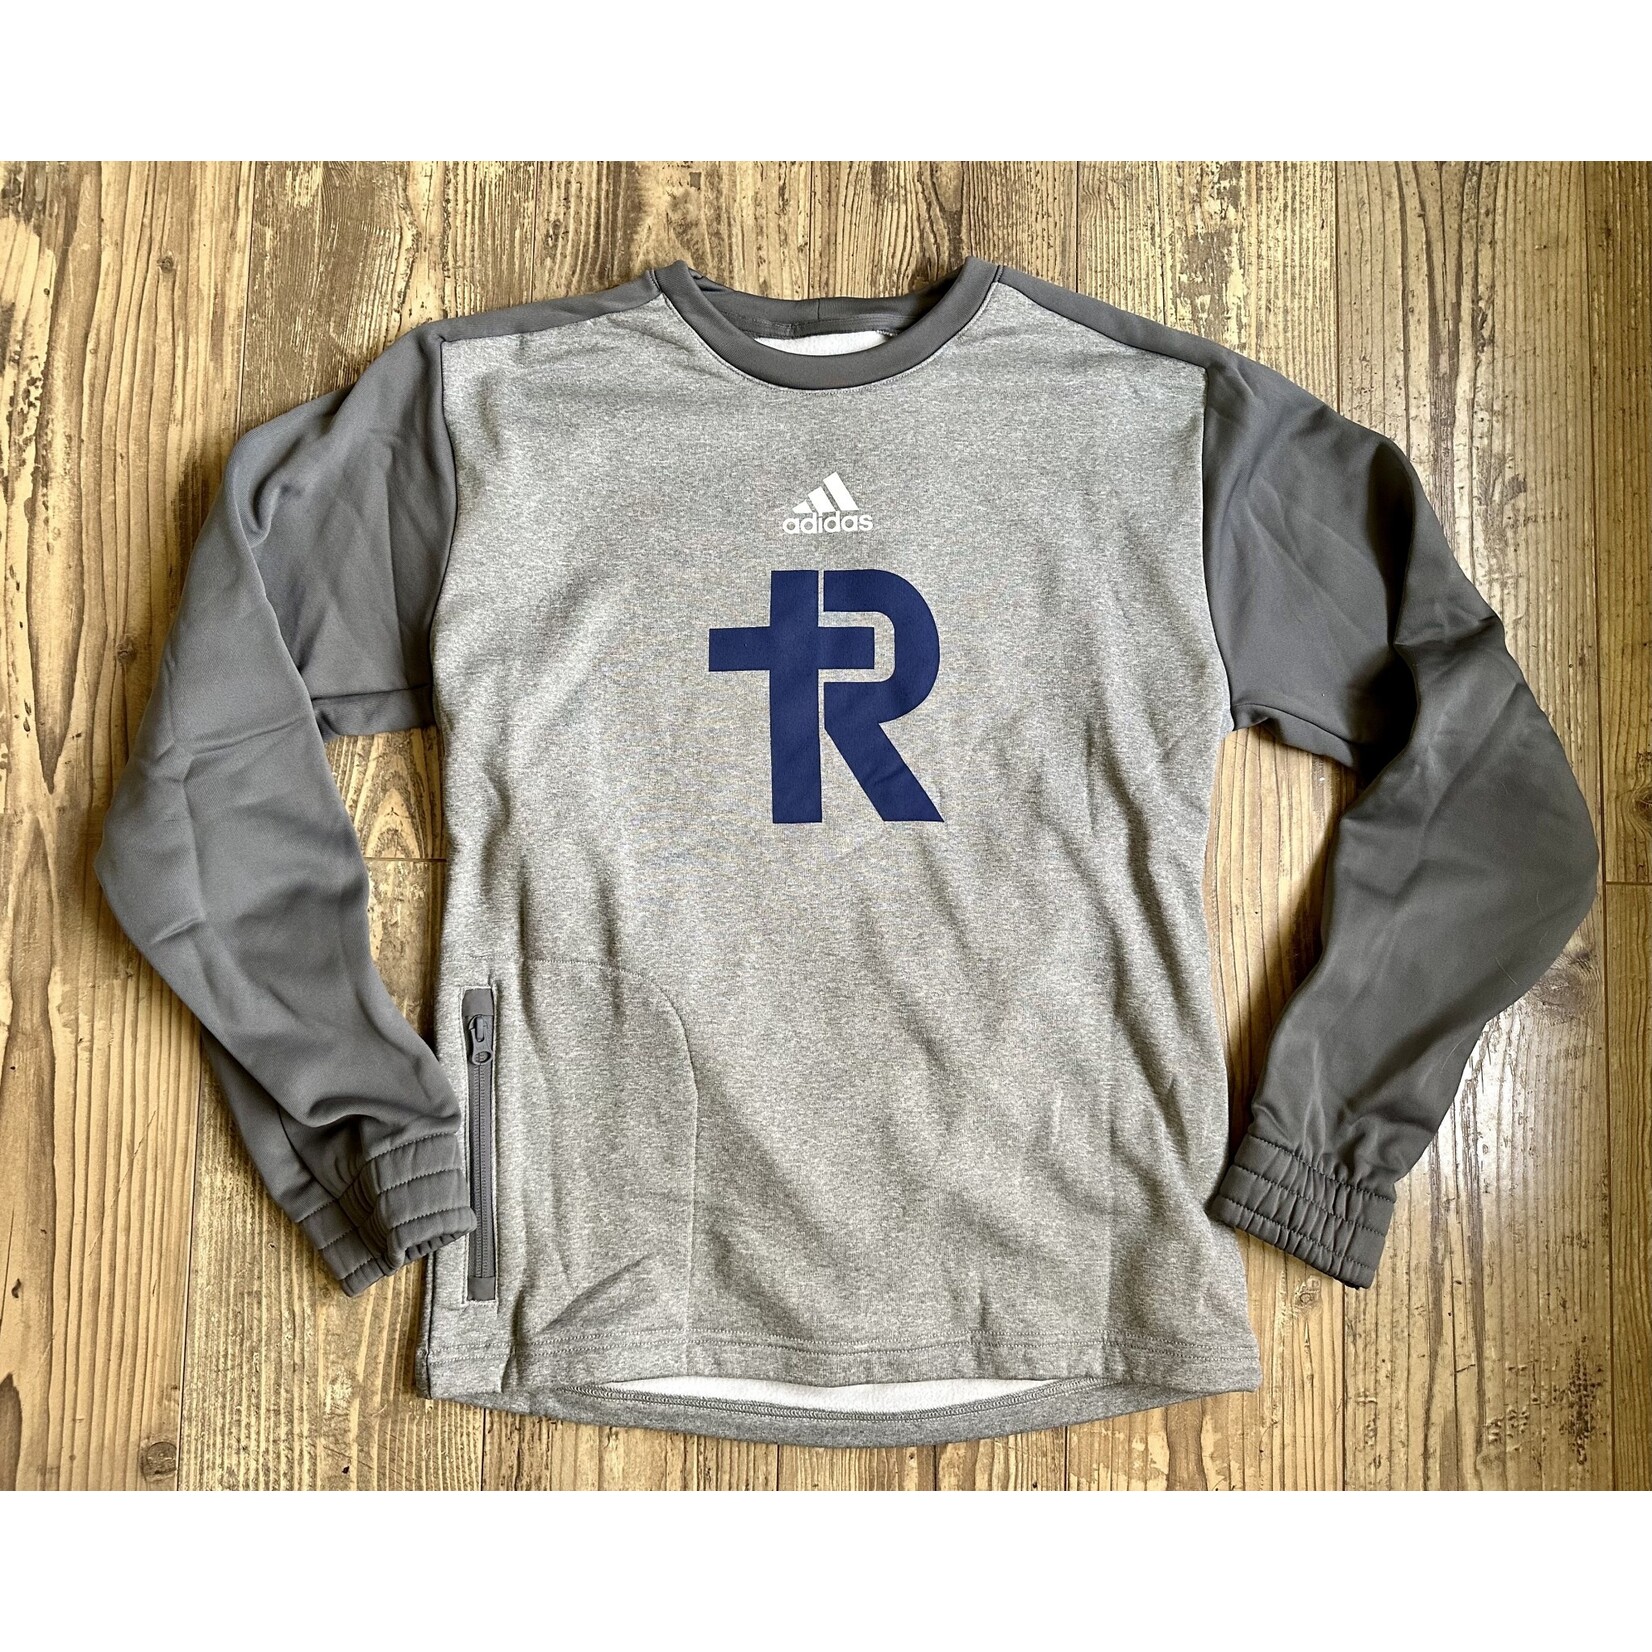 Adidas R-Cross Sweatshirt